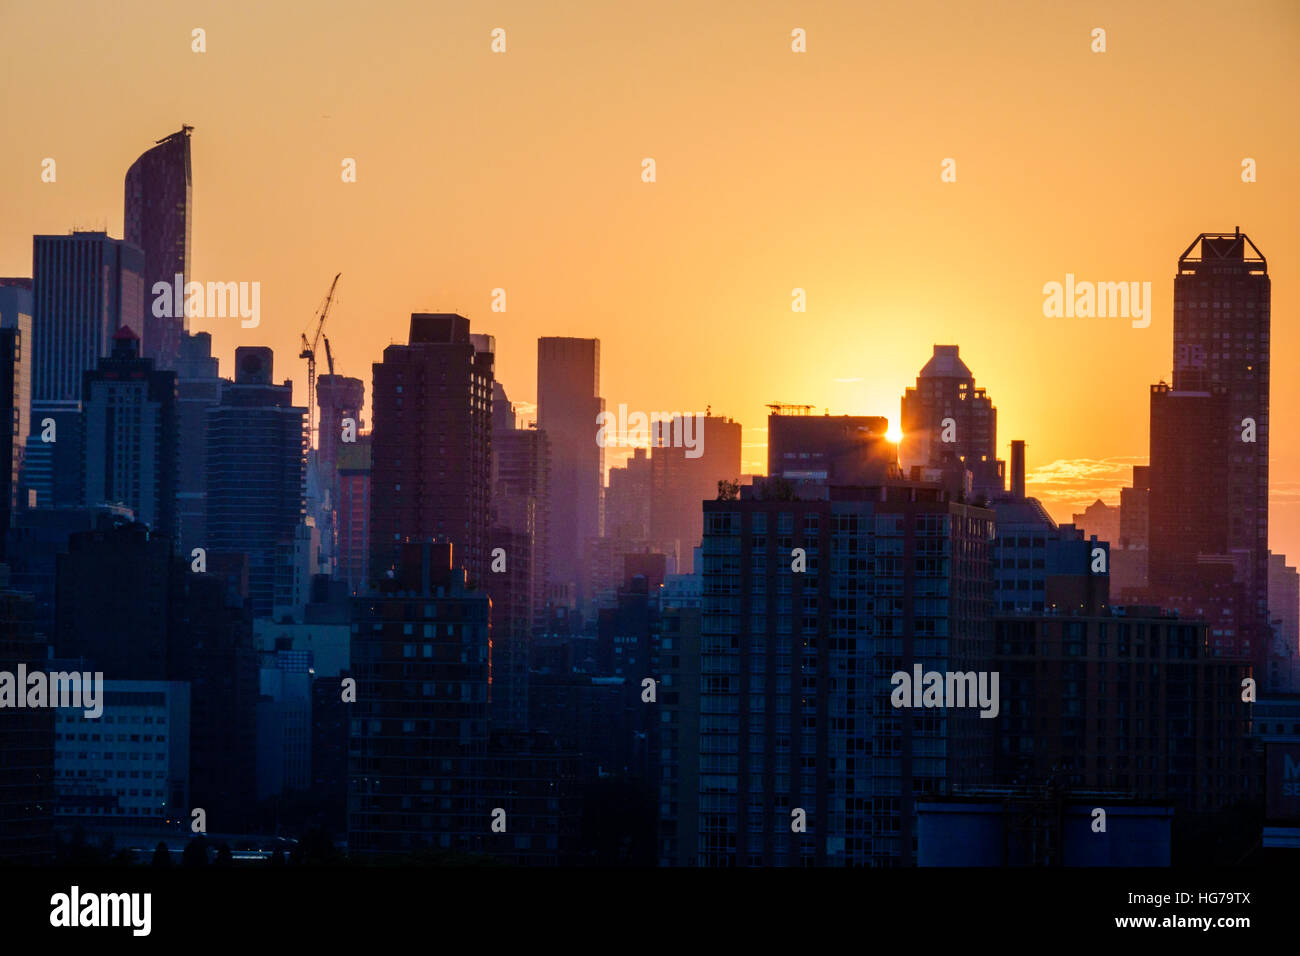 New York City,NY NYC Queens,Long Island City,view,Manhattan skyline,buildings,sunset,sunrays,orange,yellow,silhouette,NY160723099 Stock Photo